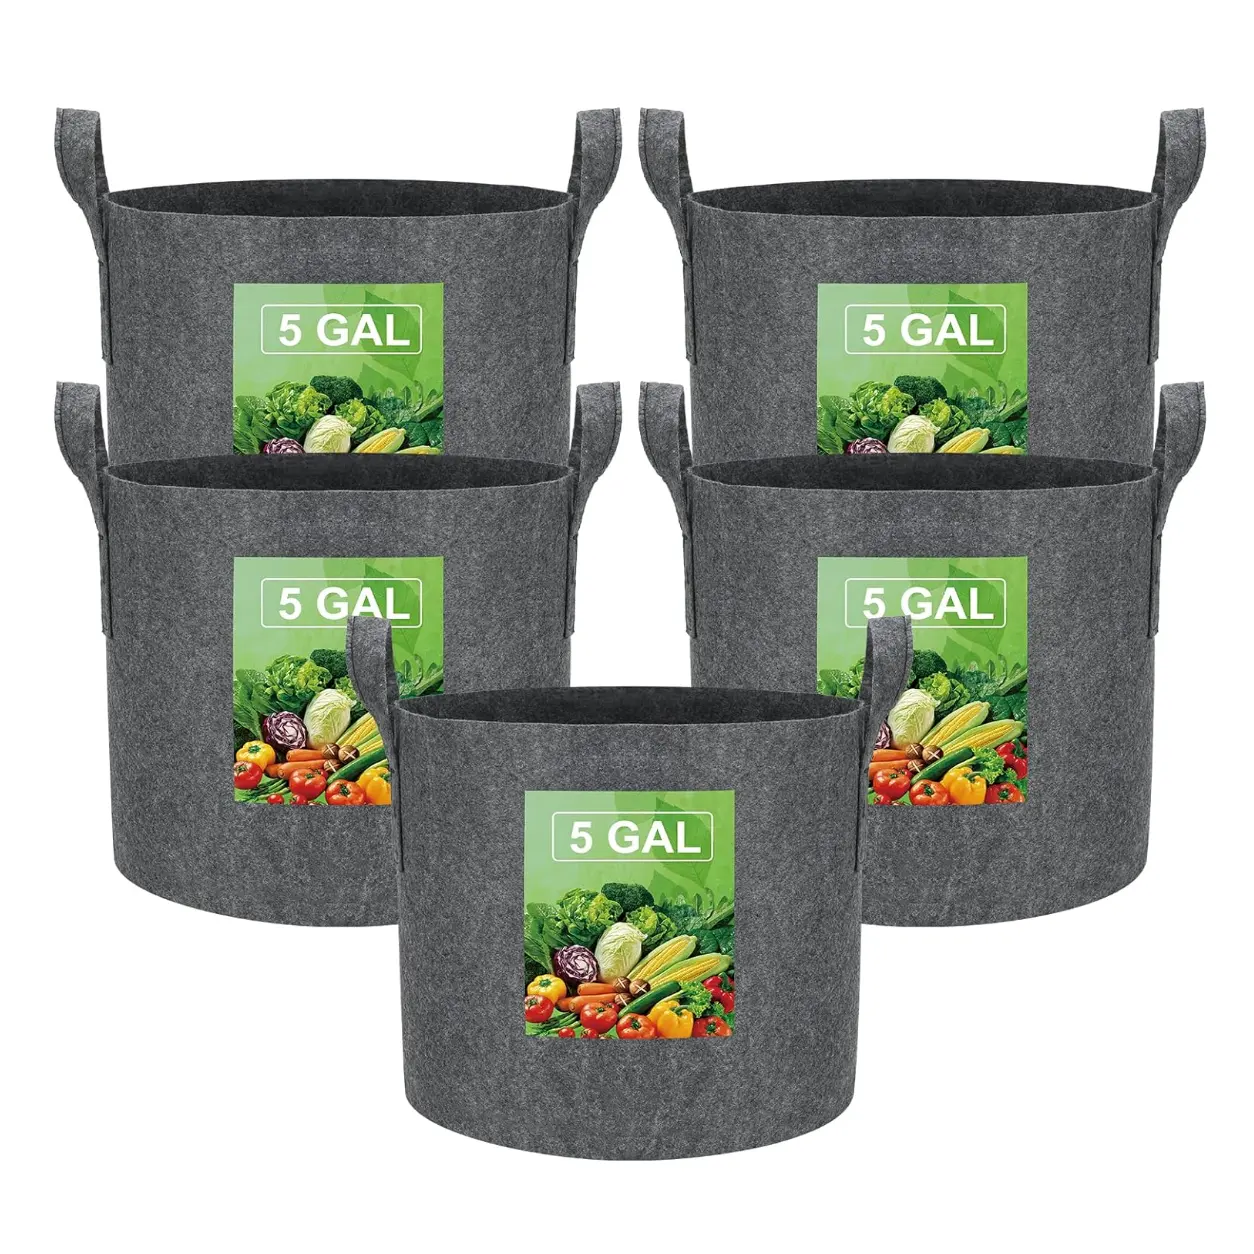 VIEWALL Grow Bags Heavy Duty Fabric Pots